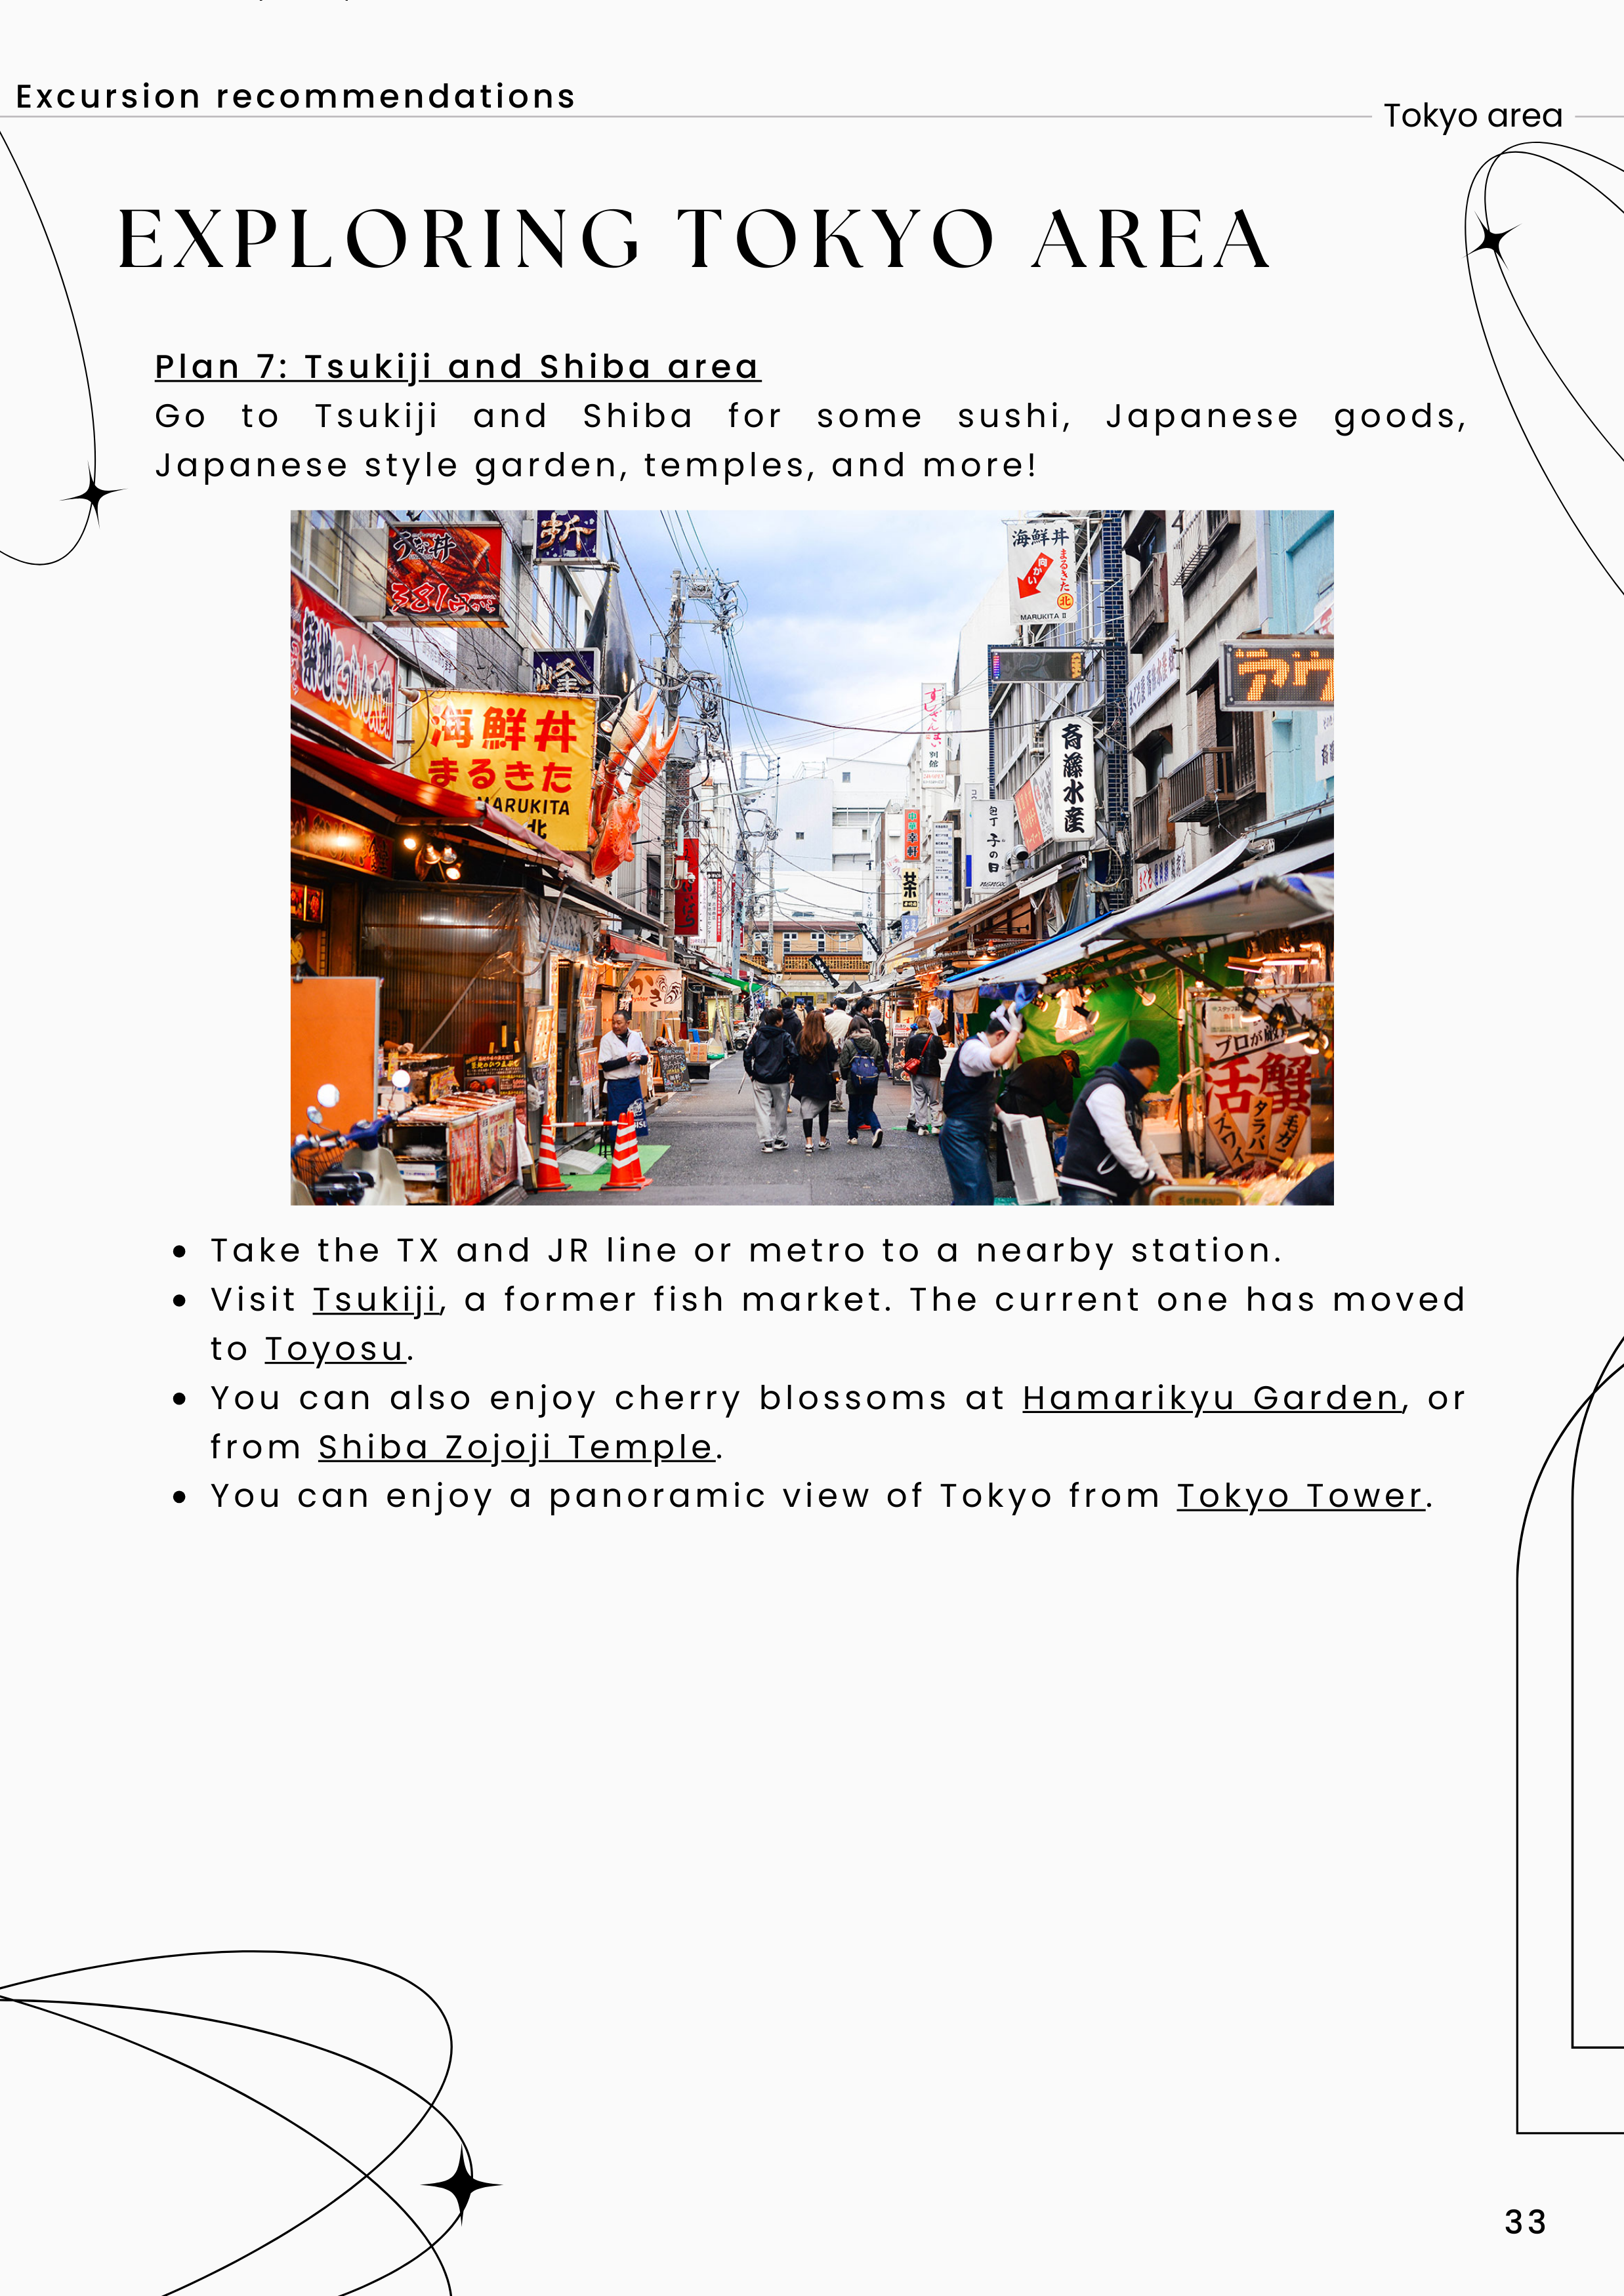 Excursion Plans - Tokyo_ 4.png